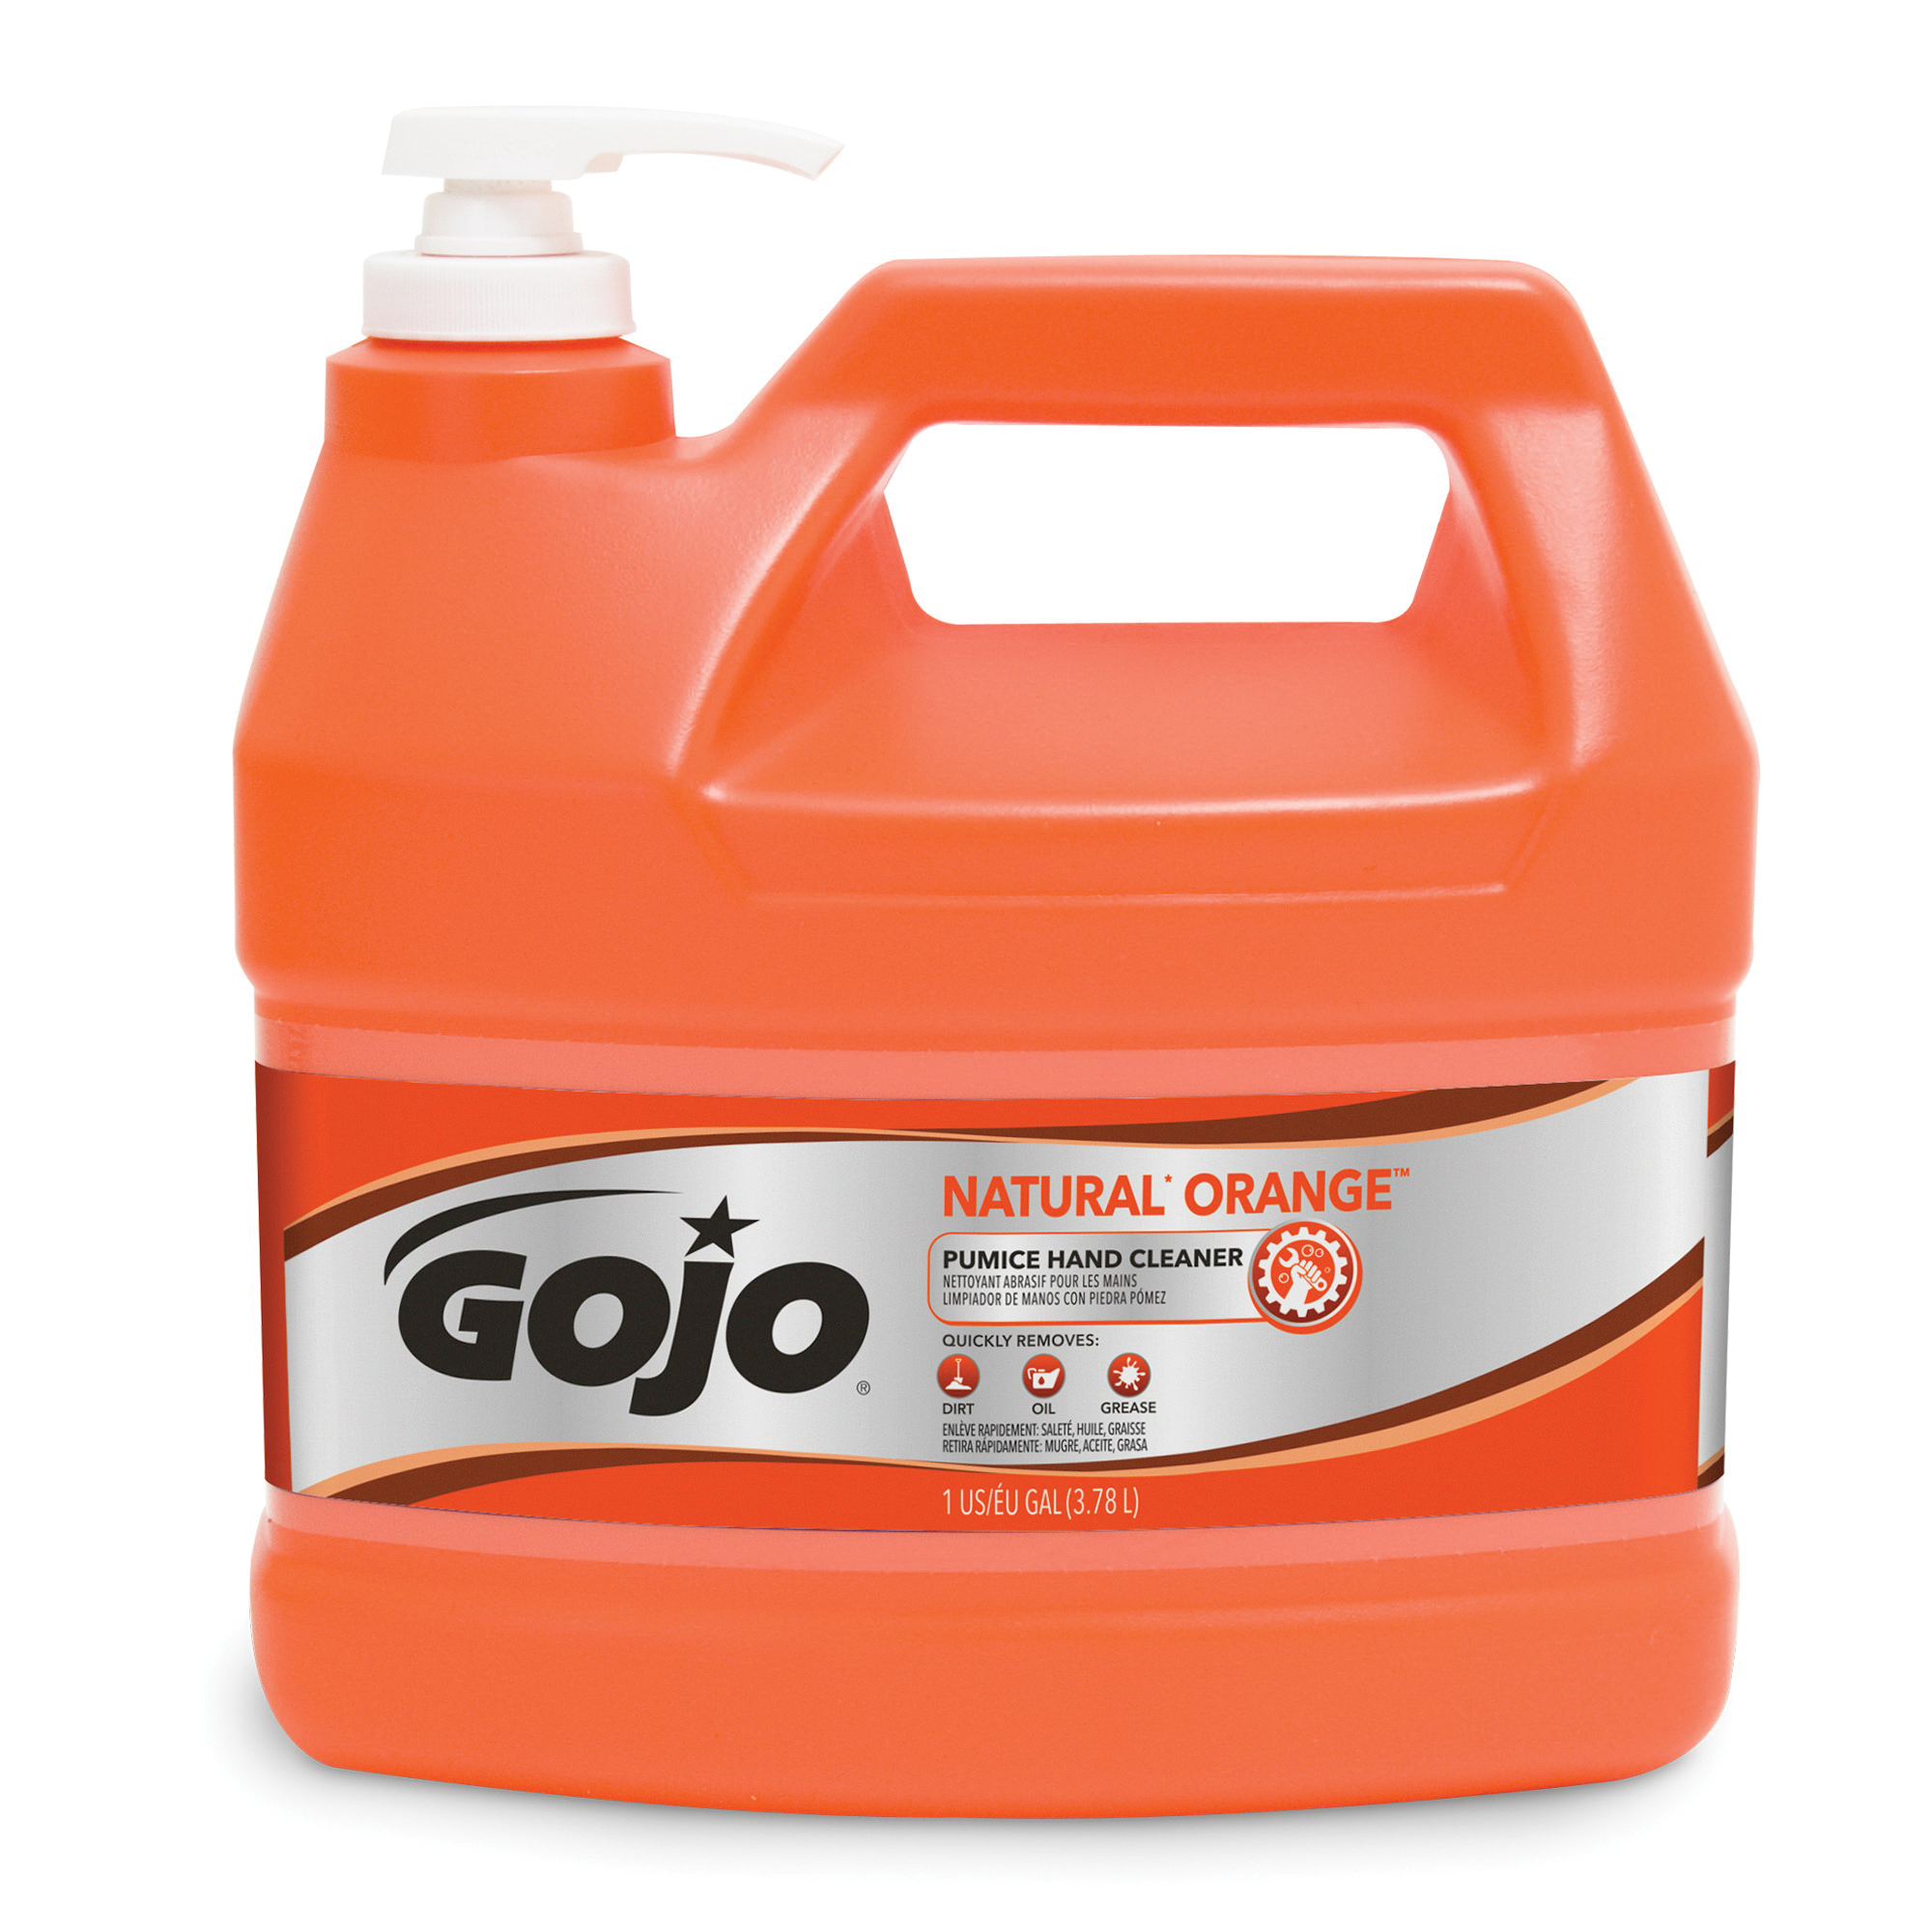 GOJO Natural Orange Pumice Hand Cleaner in 1 Gallon Pump bottle